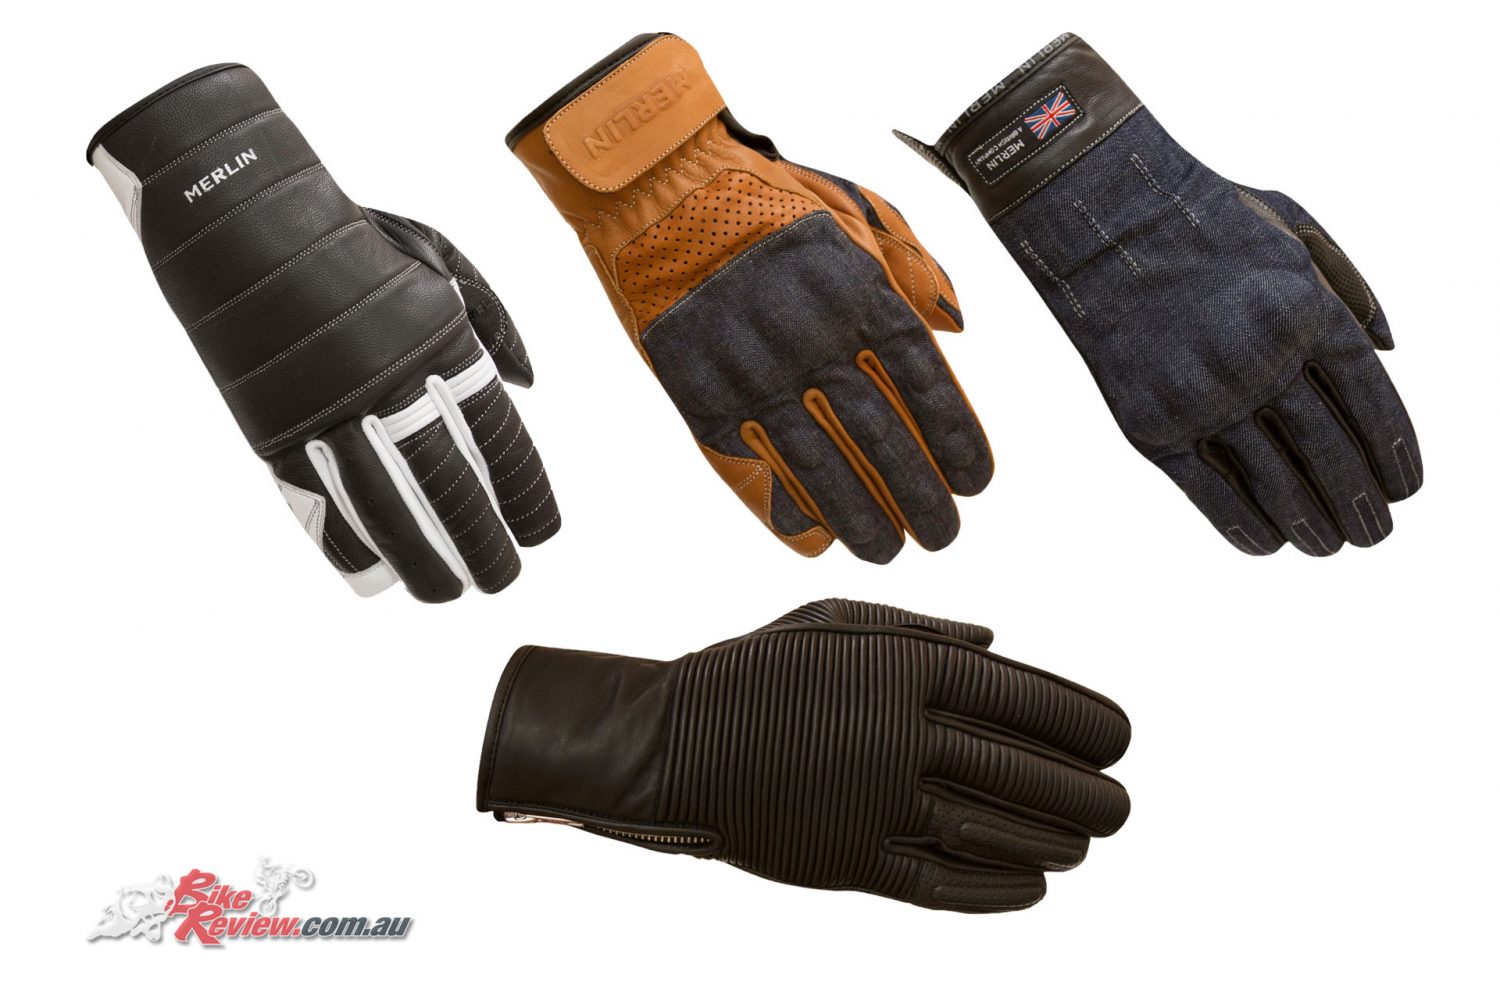 Merlin 2019 Motorcycle Glove range updated